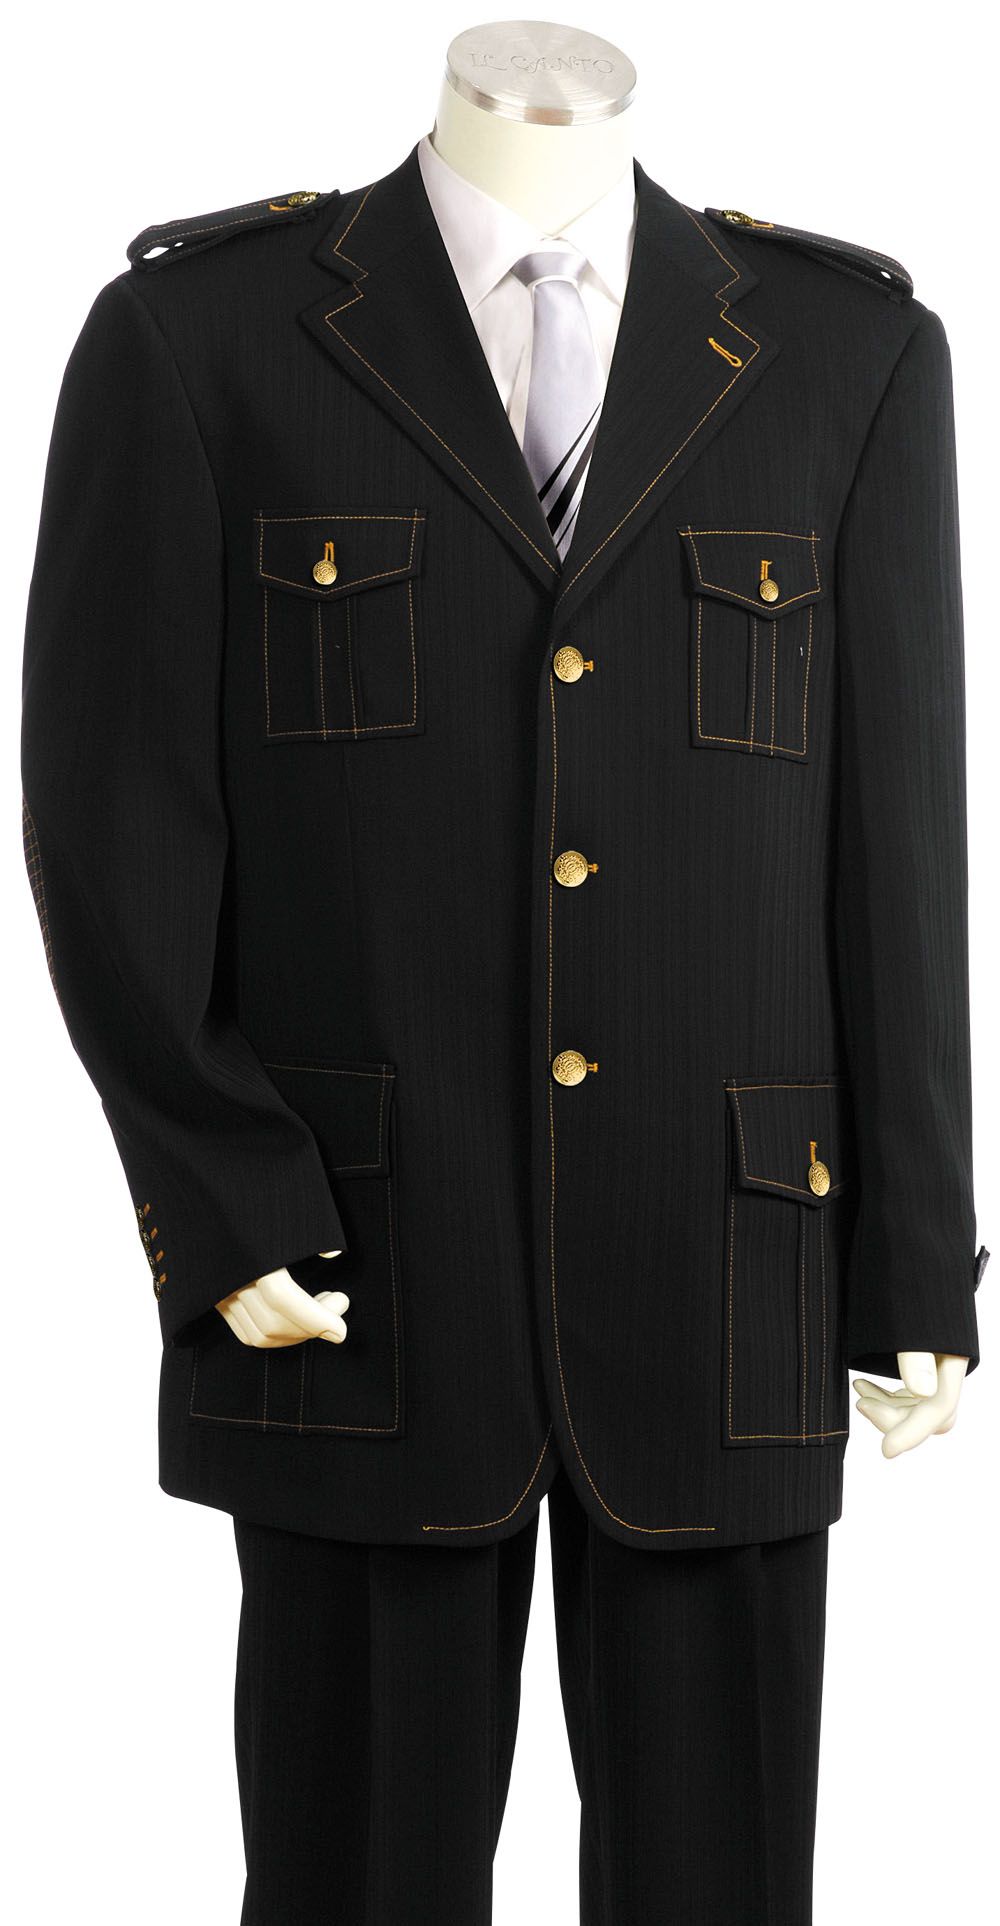 Canto Men's 2 Piece Military Fashion Suit with Shoulder Epaulettes